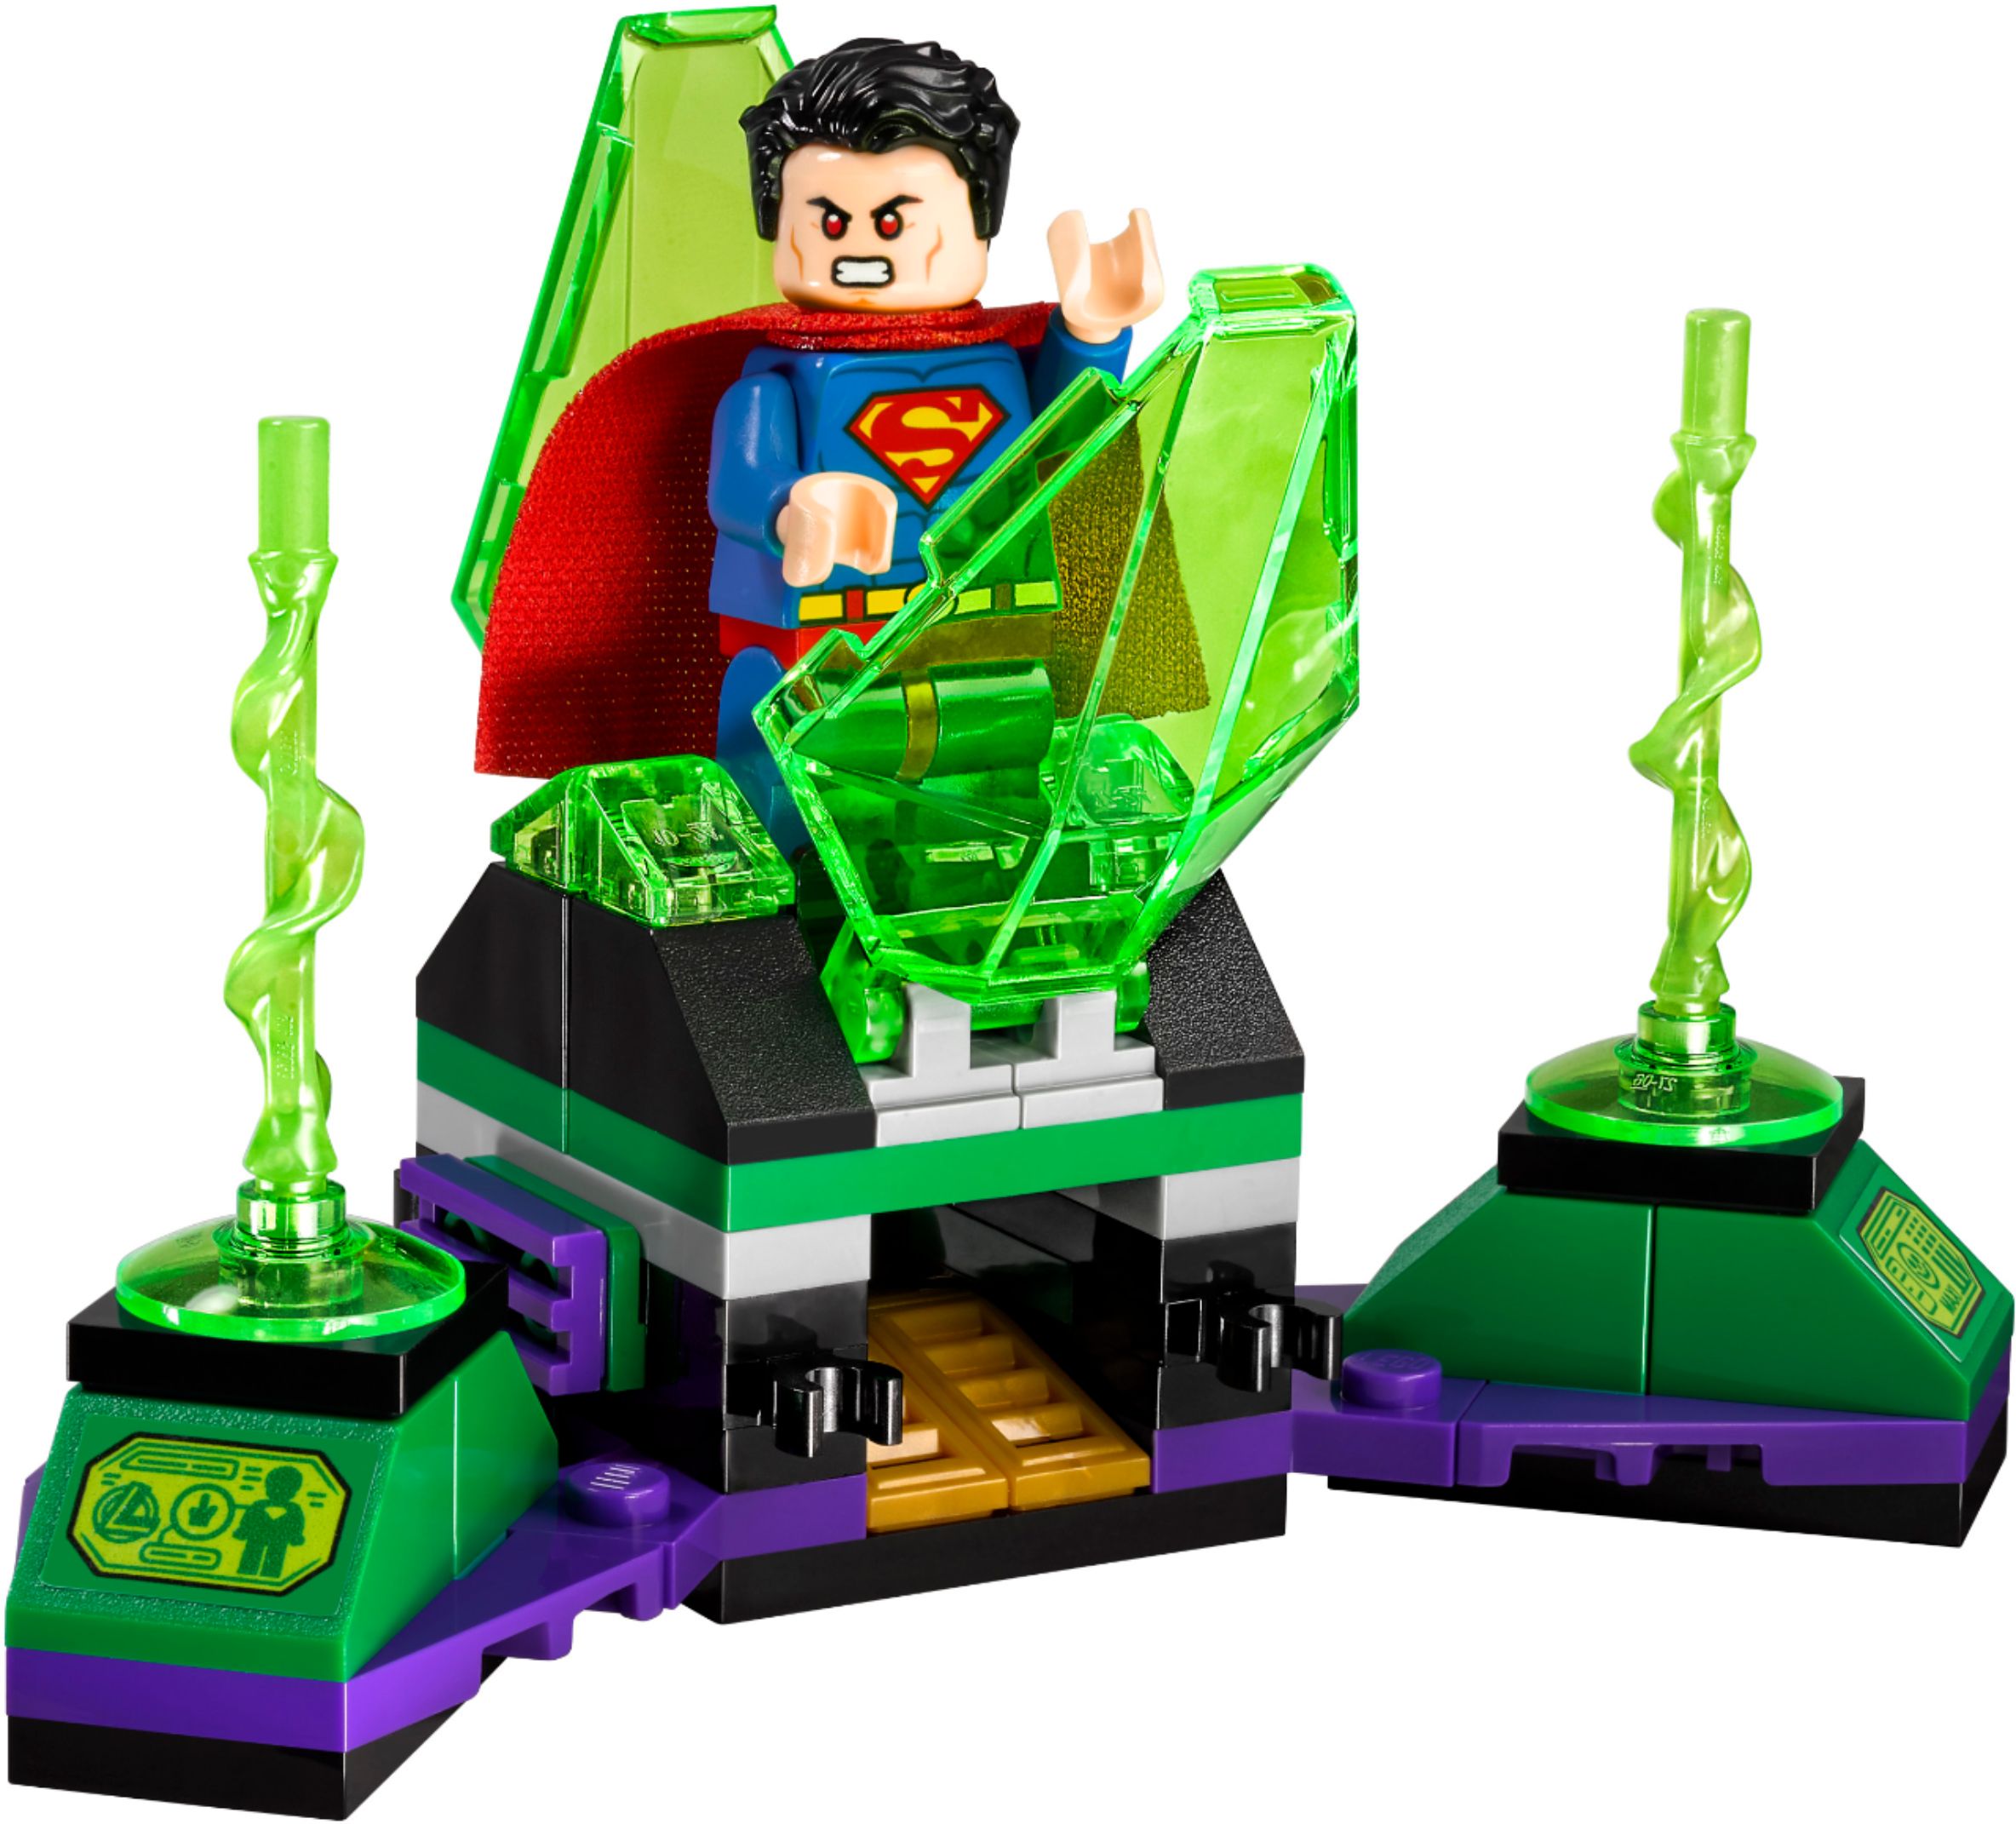 LEGO DC Comics Super Heroes: Justice League Cosmic Clash [With Figurine]  [DVD] - Best Buy